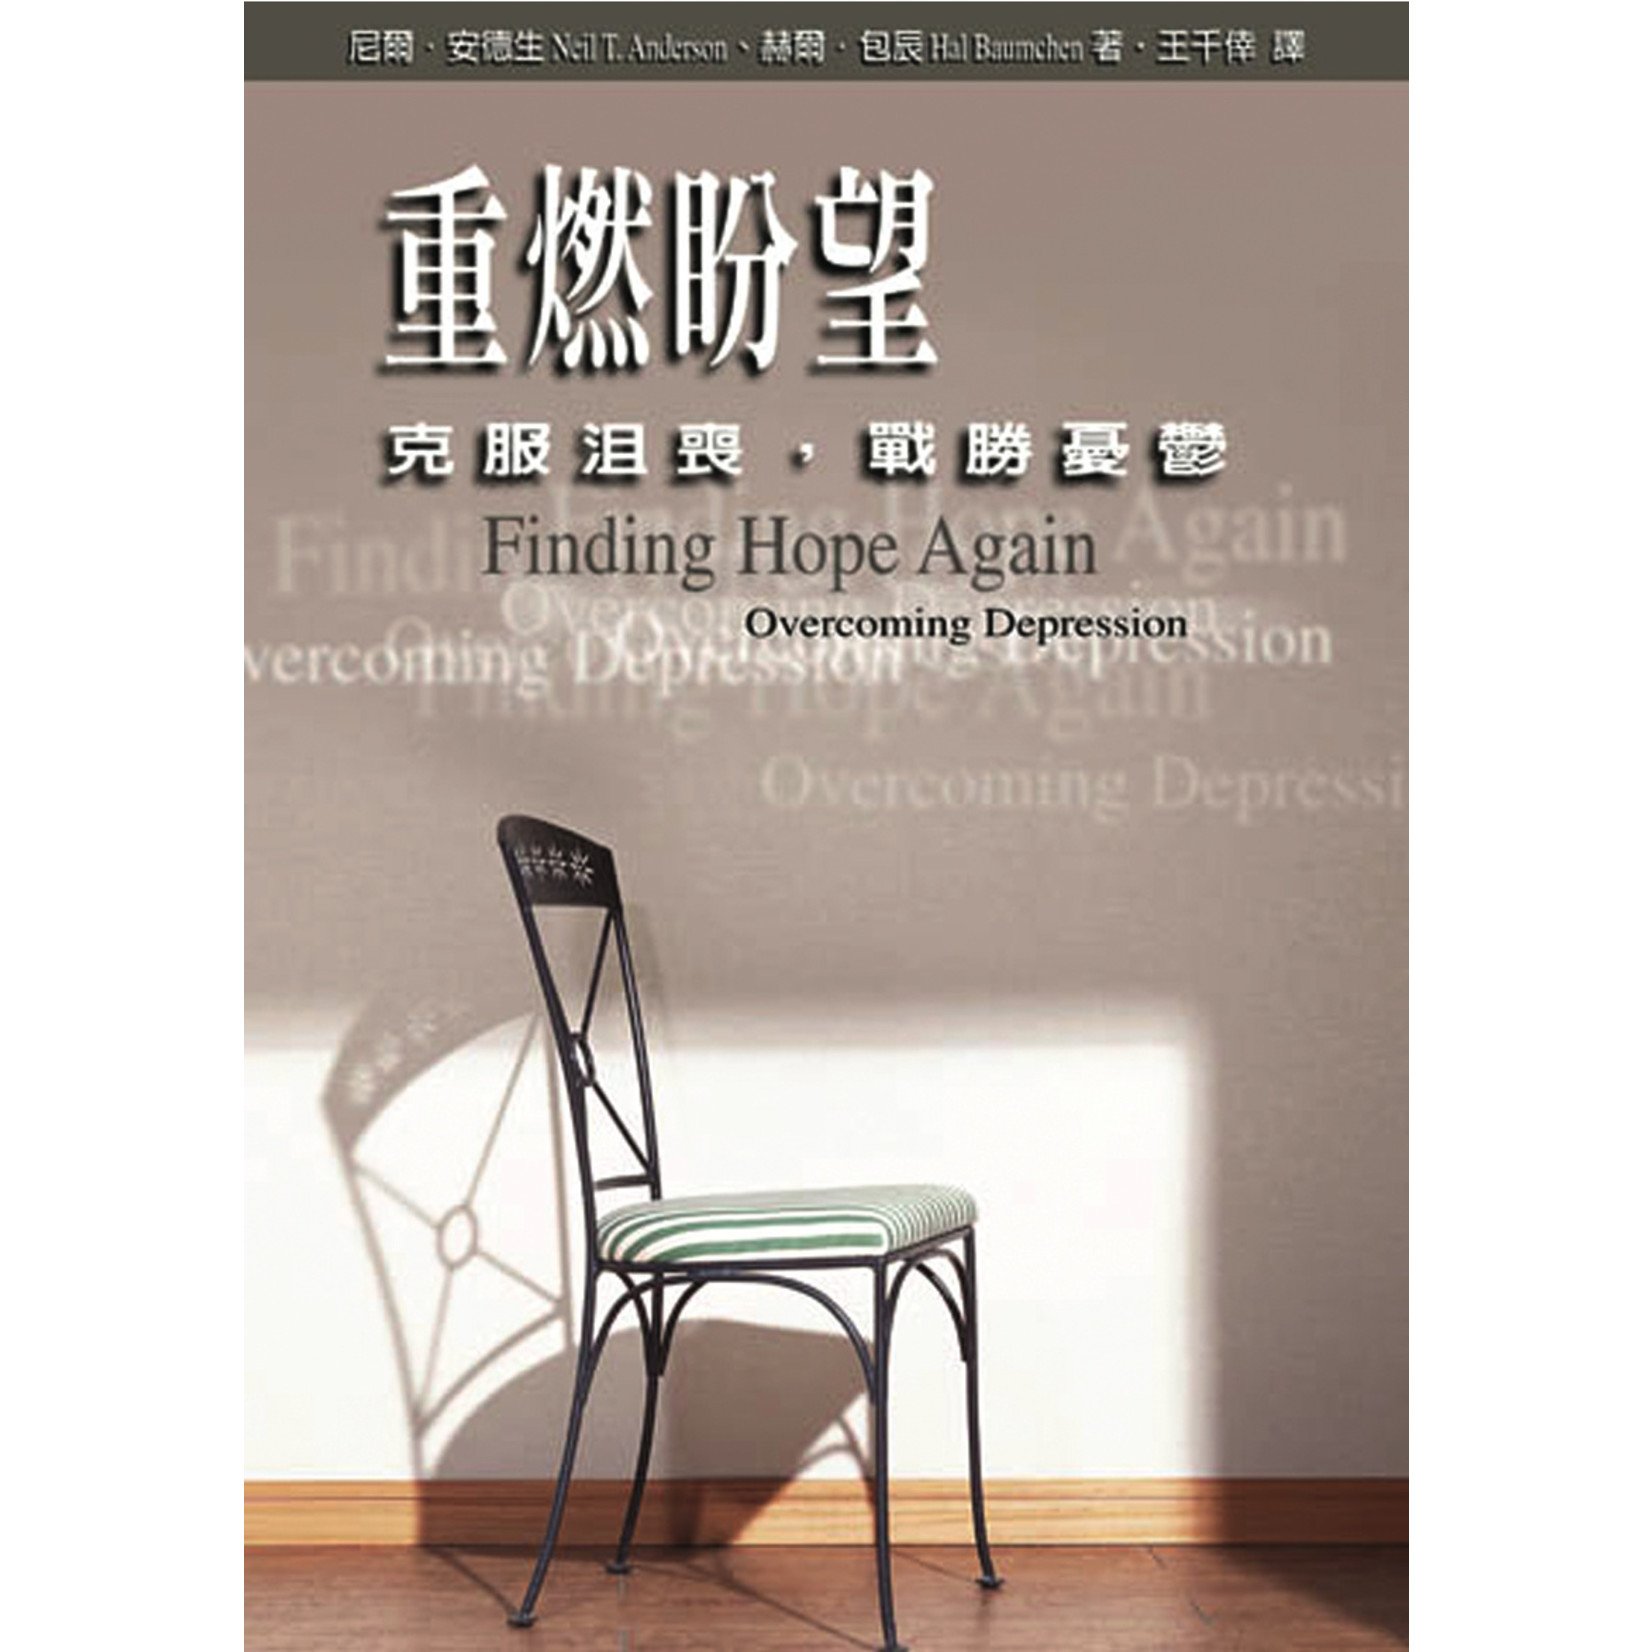 中國學園傳道會 Taiwan Campus Crusade for Christ 重燃盼望：克服沮喪，戰勝憂鬱 Finding Hope Again